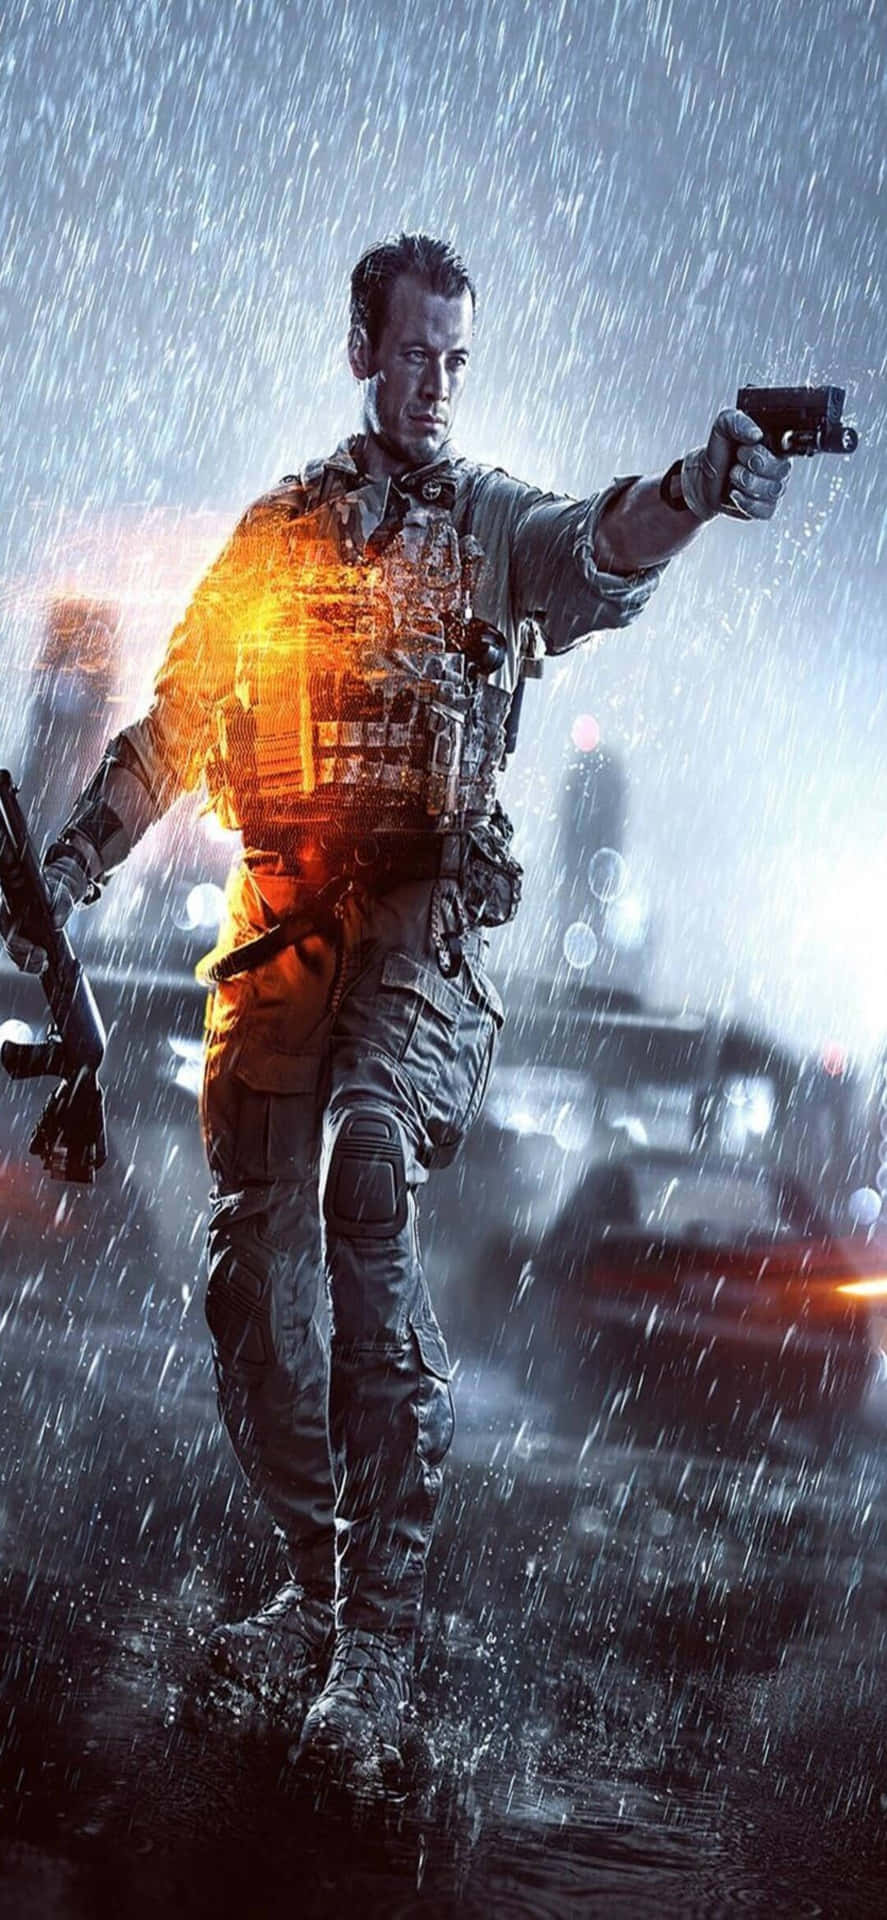 Iphonexs Bakgrund Med Battlefield 4 Fordon